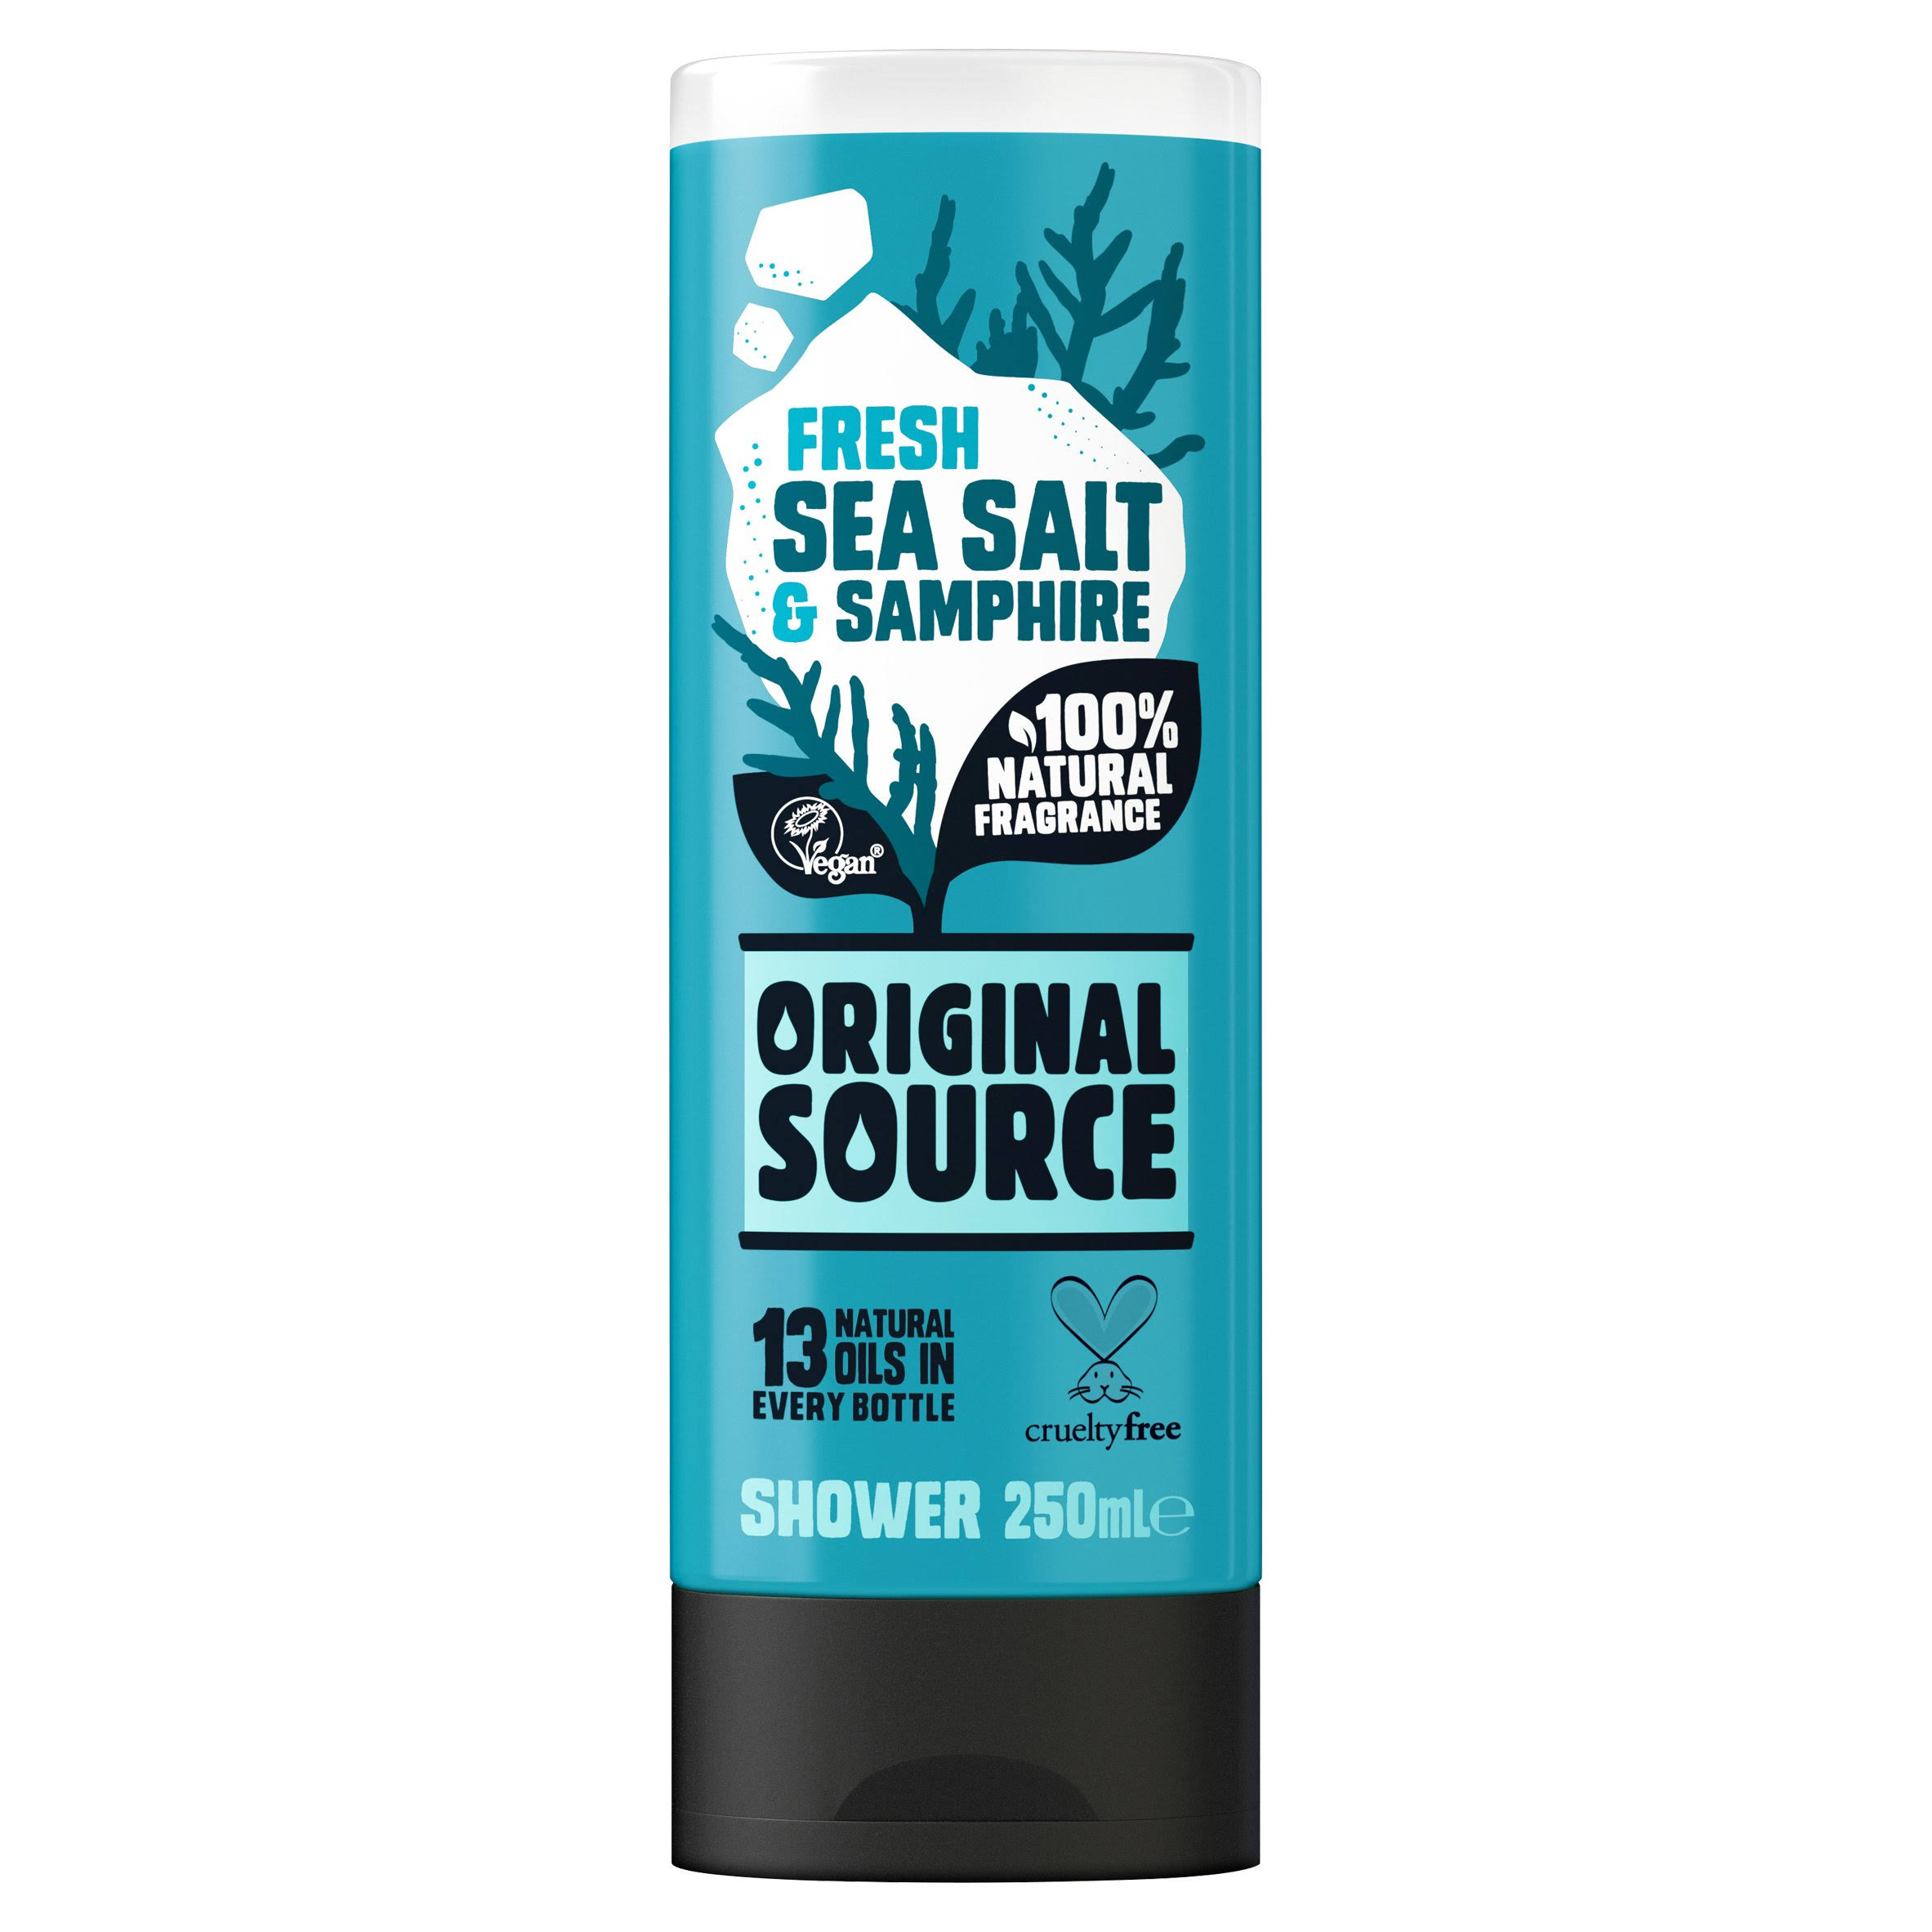 Original Source Sea Salt and Samphire Shower Gel 250ml